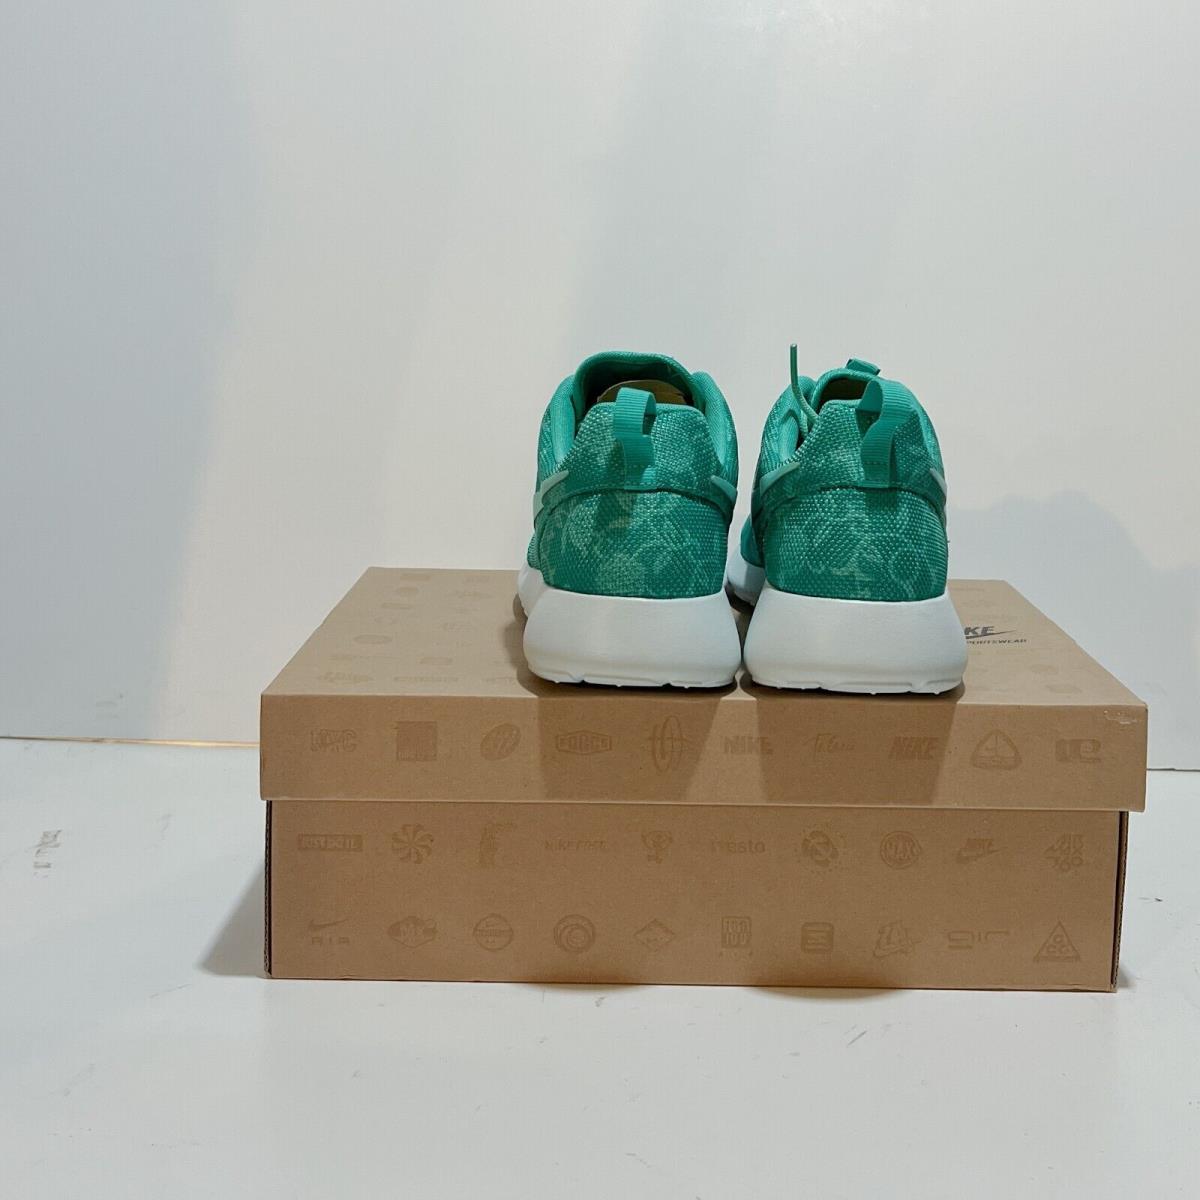 Nike shoes  - Green 1